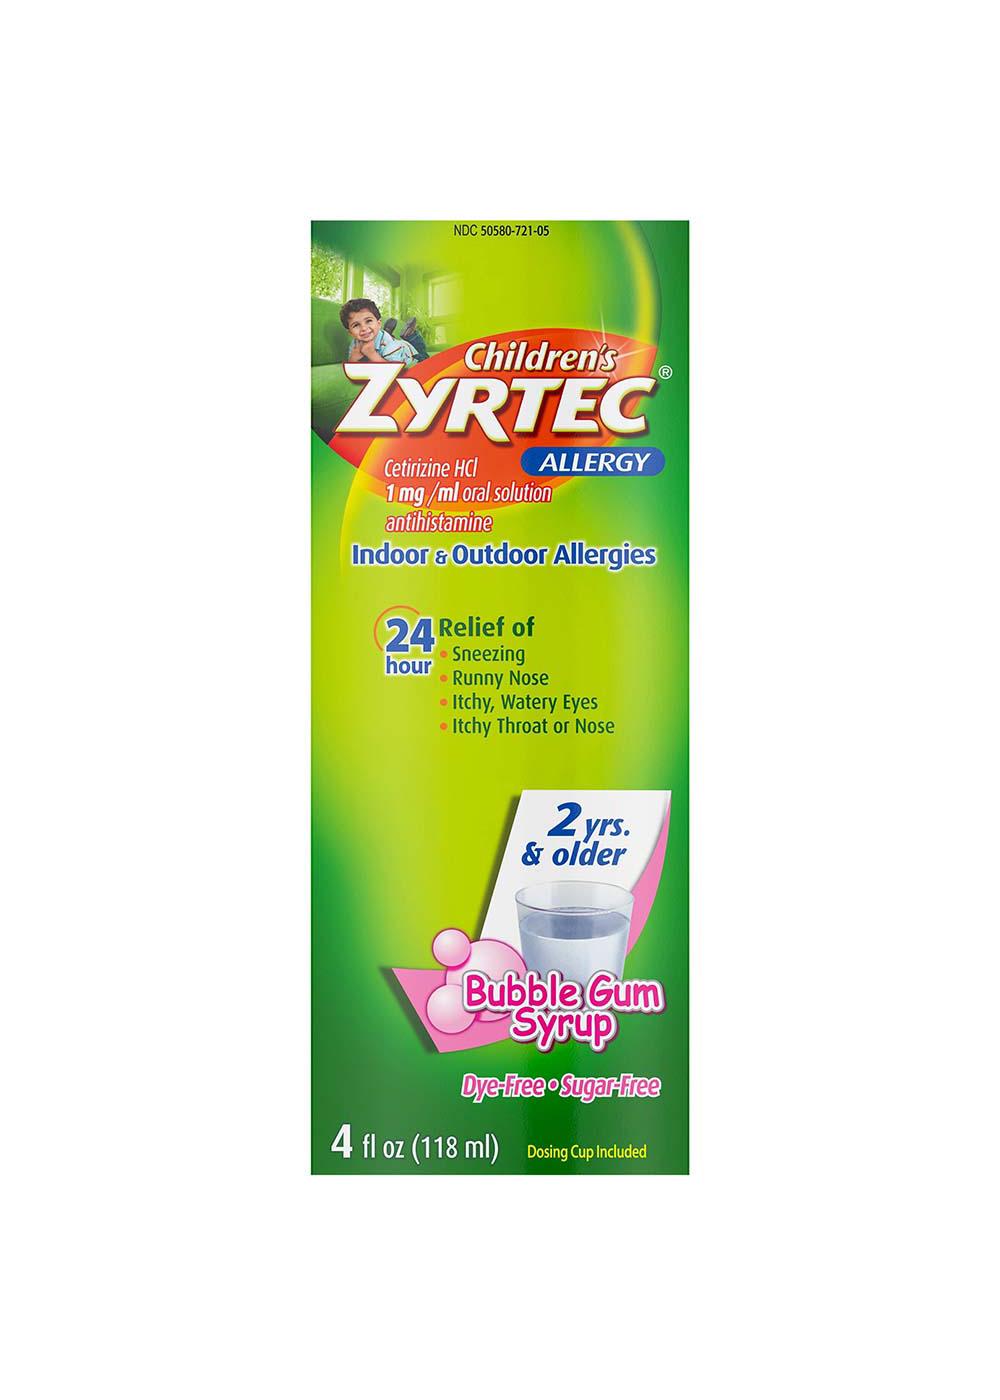 Zyrtec Children's Allergy 24 Hour Relief Syrup - Bubble Gum